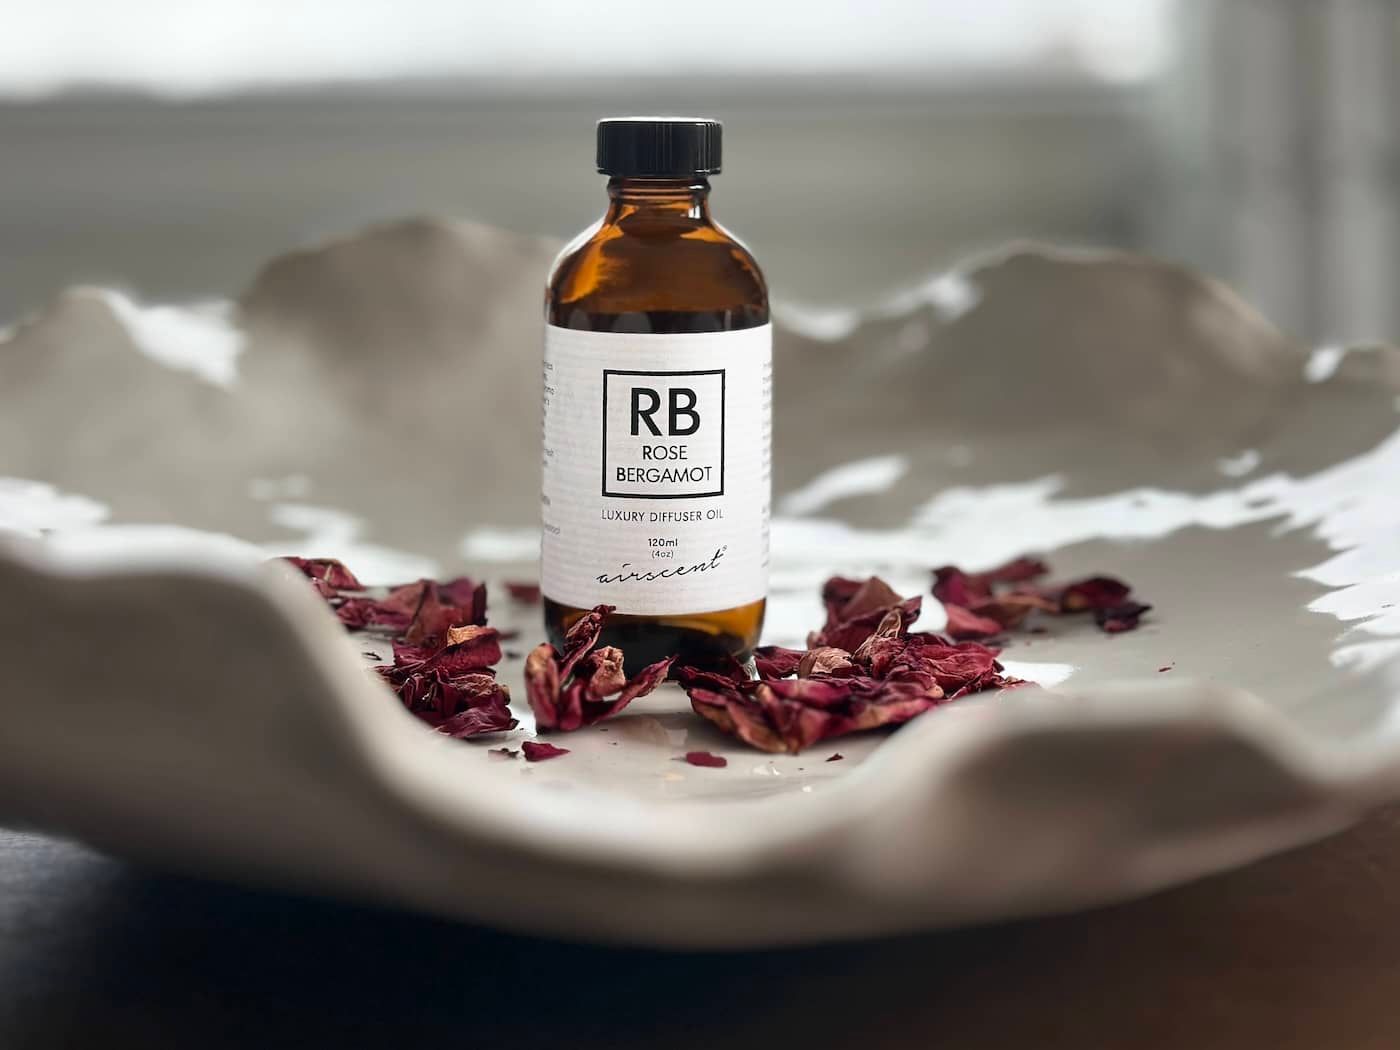 Rose Bergamot Diffuser Oil with rose petals